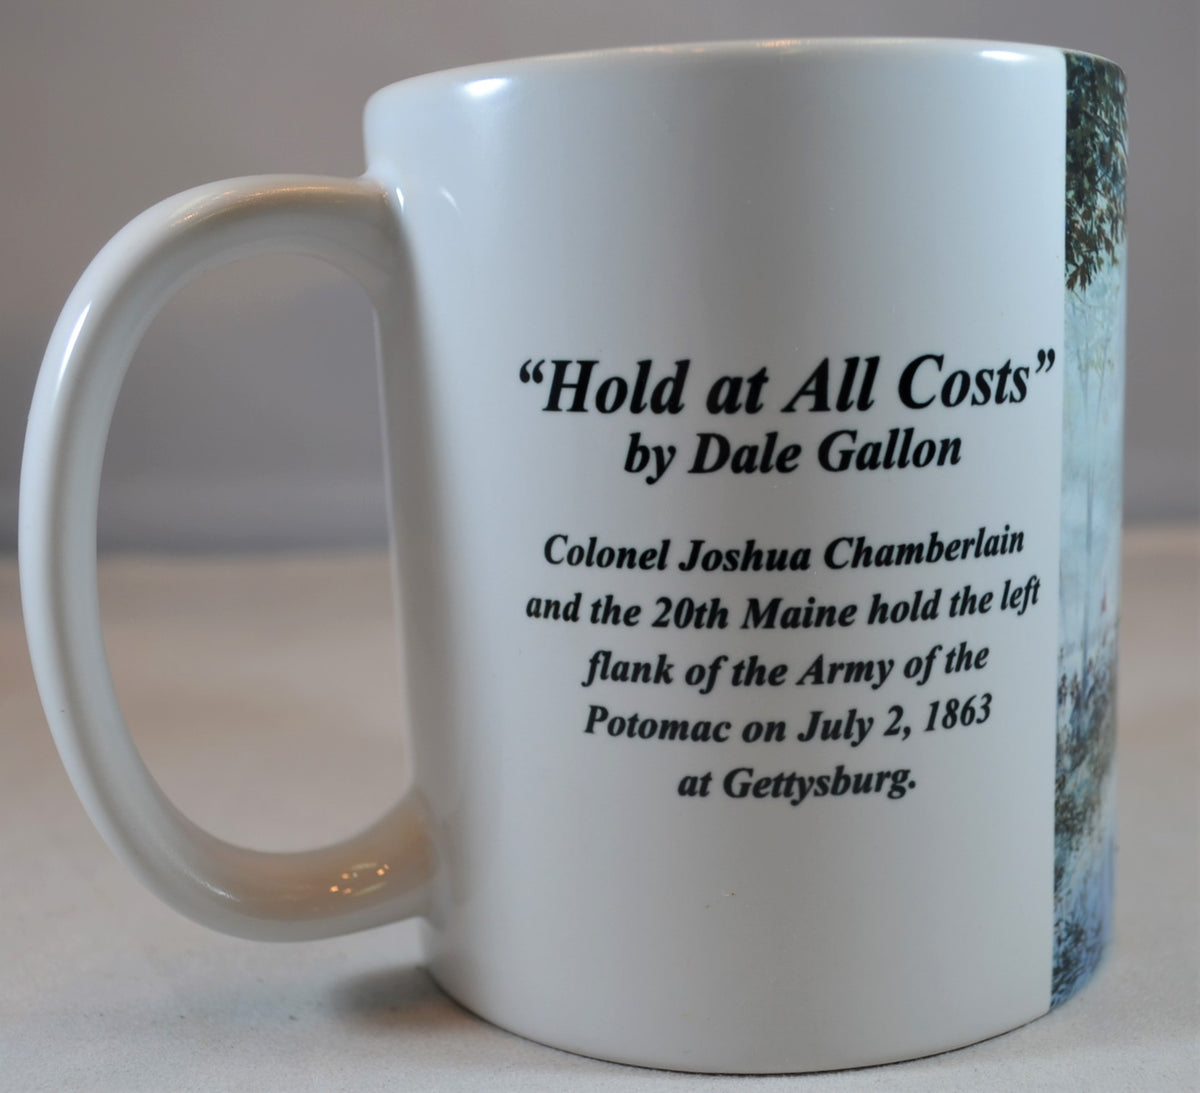 Oxlade Chamberlain Coffee Mug